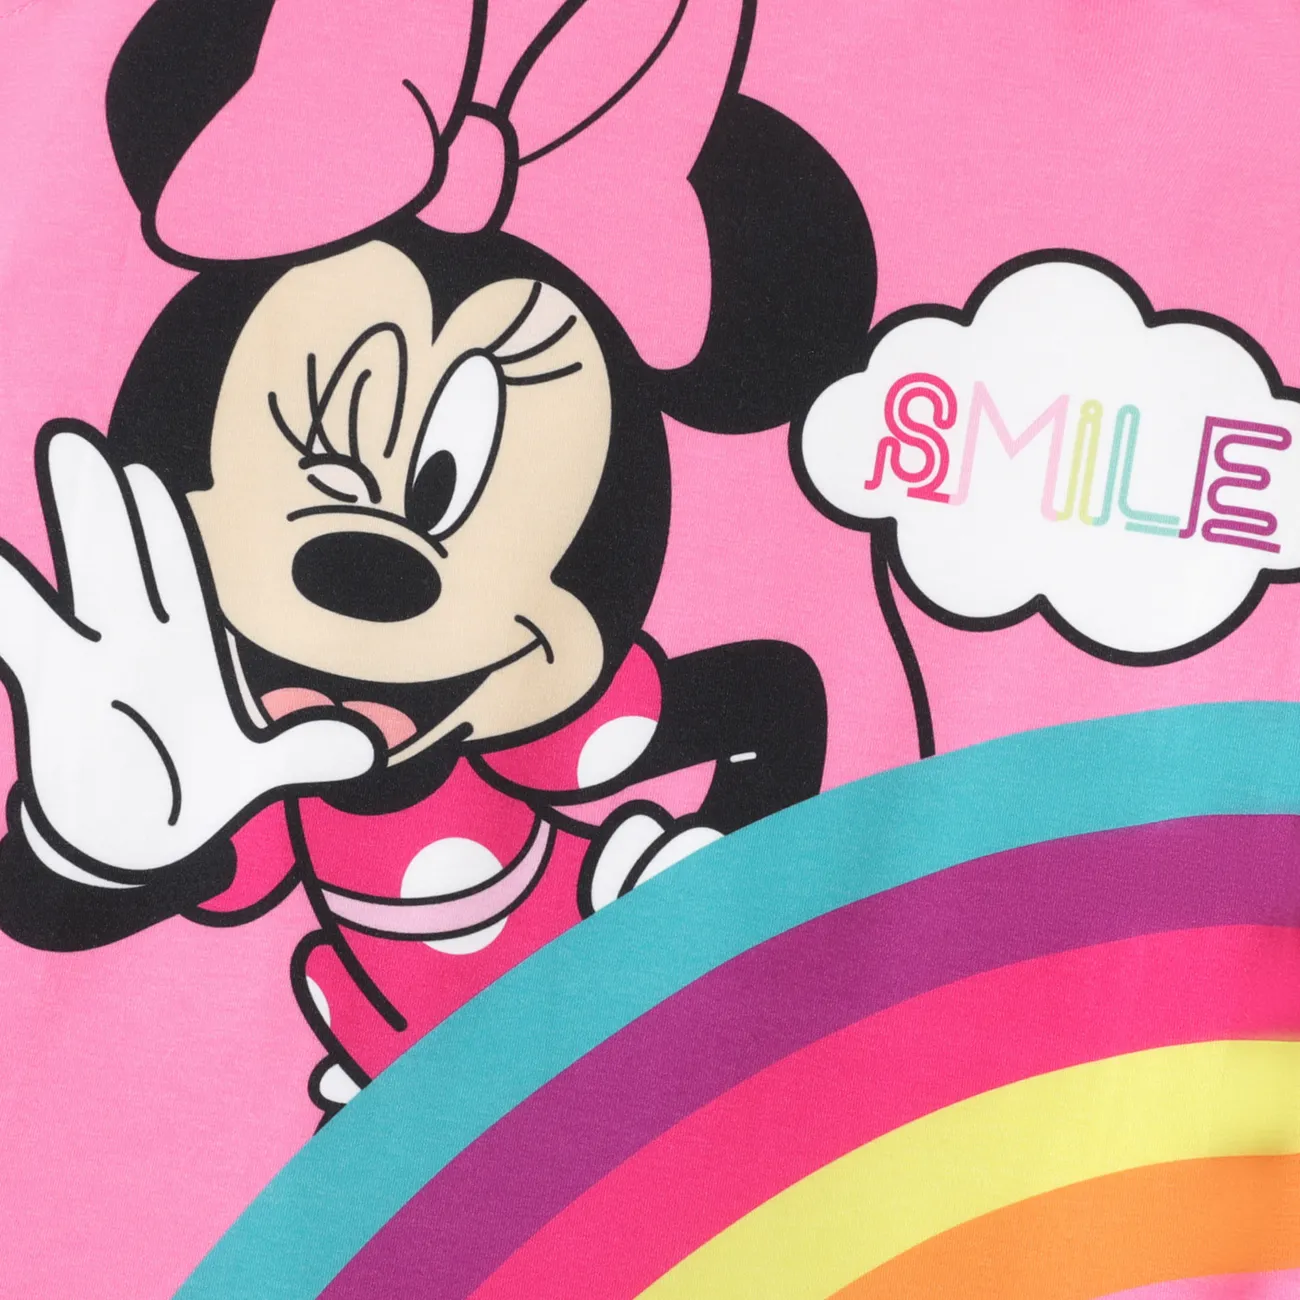 Disney Mickey and Friends IP Chica Costura de tela Infantil Vestidos rosado big image 1